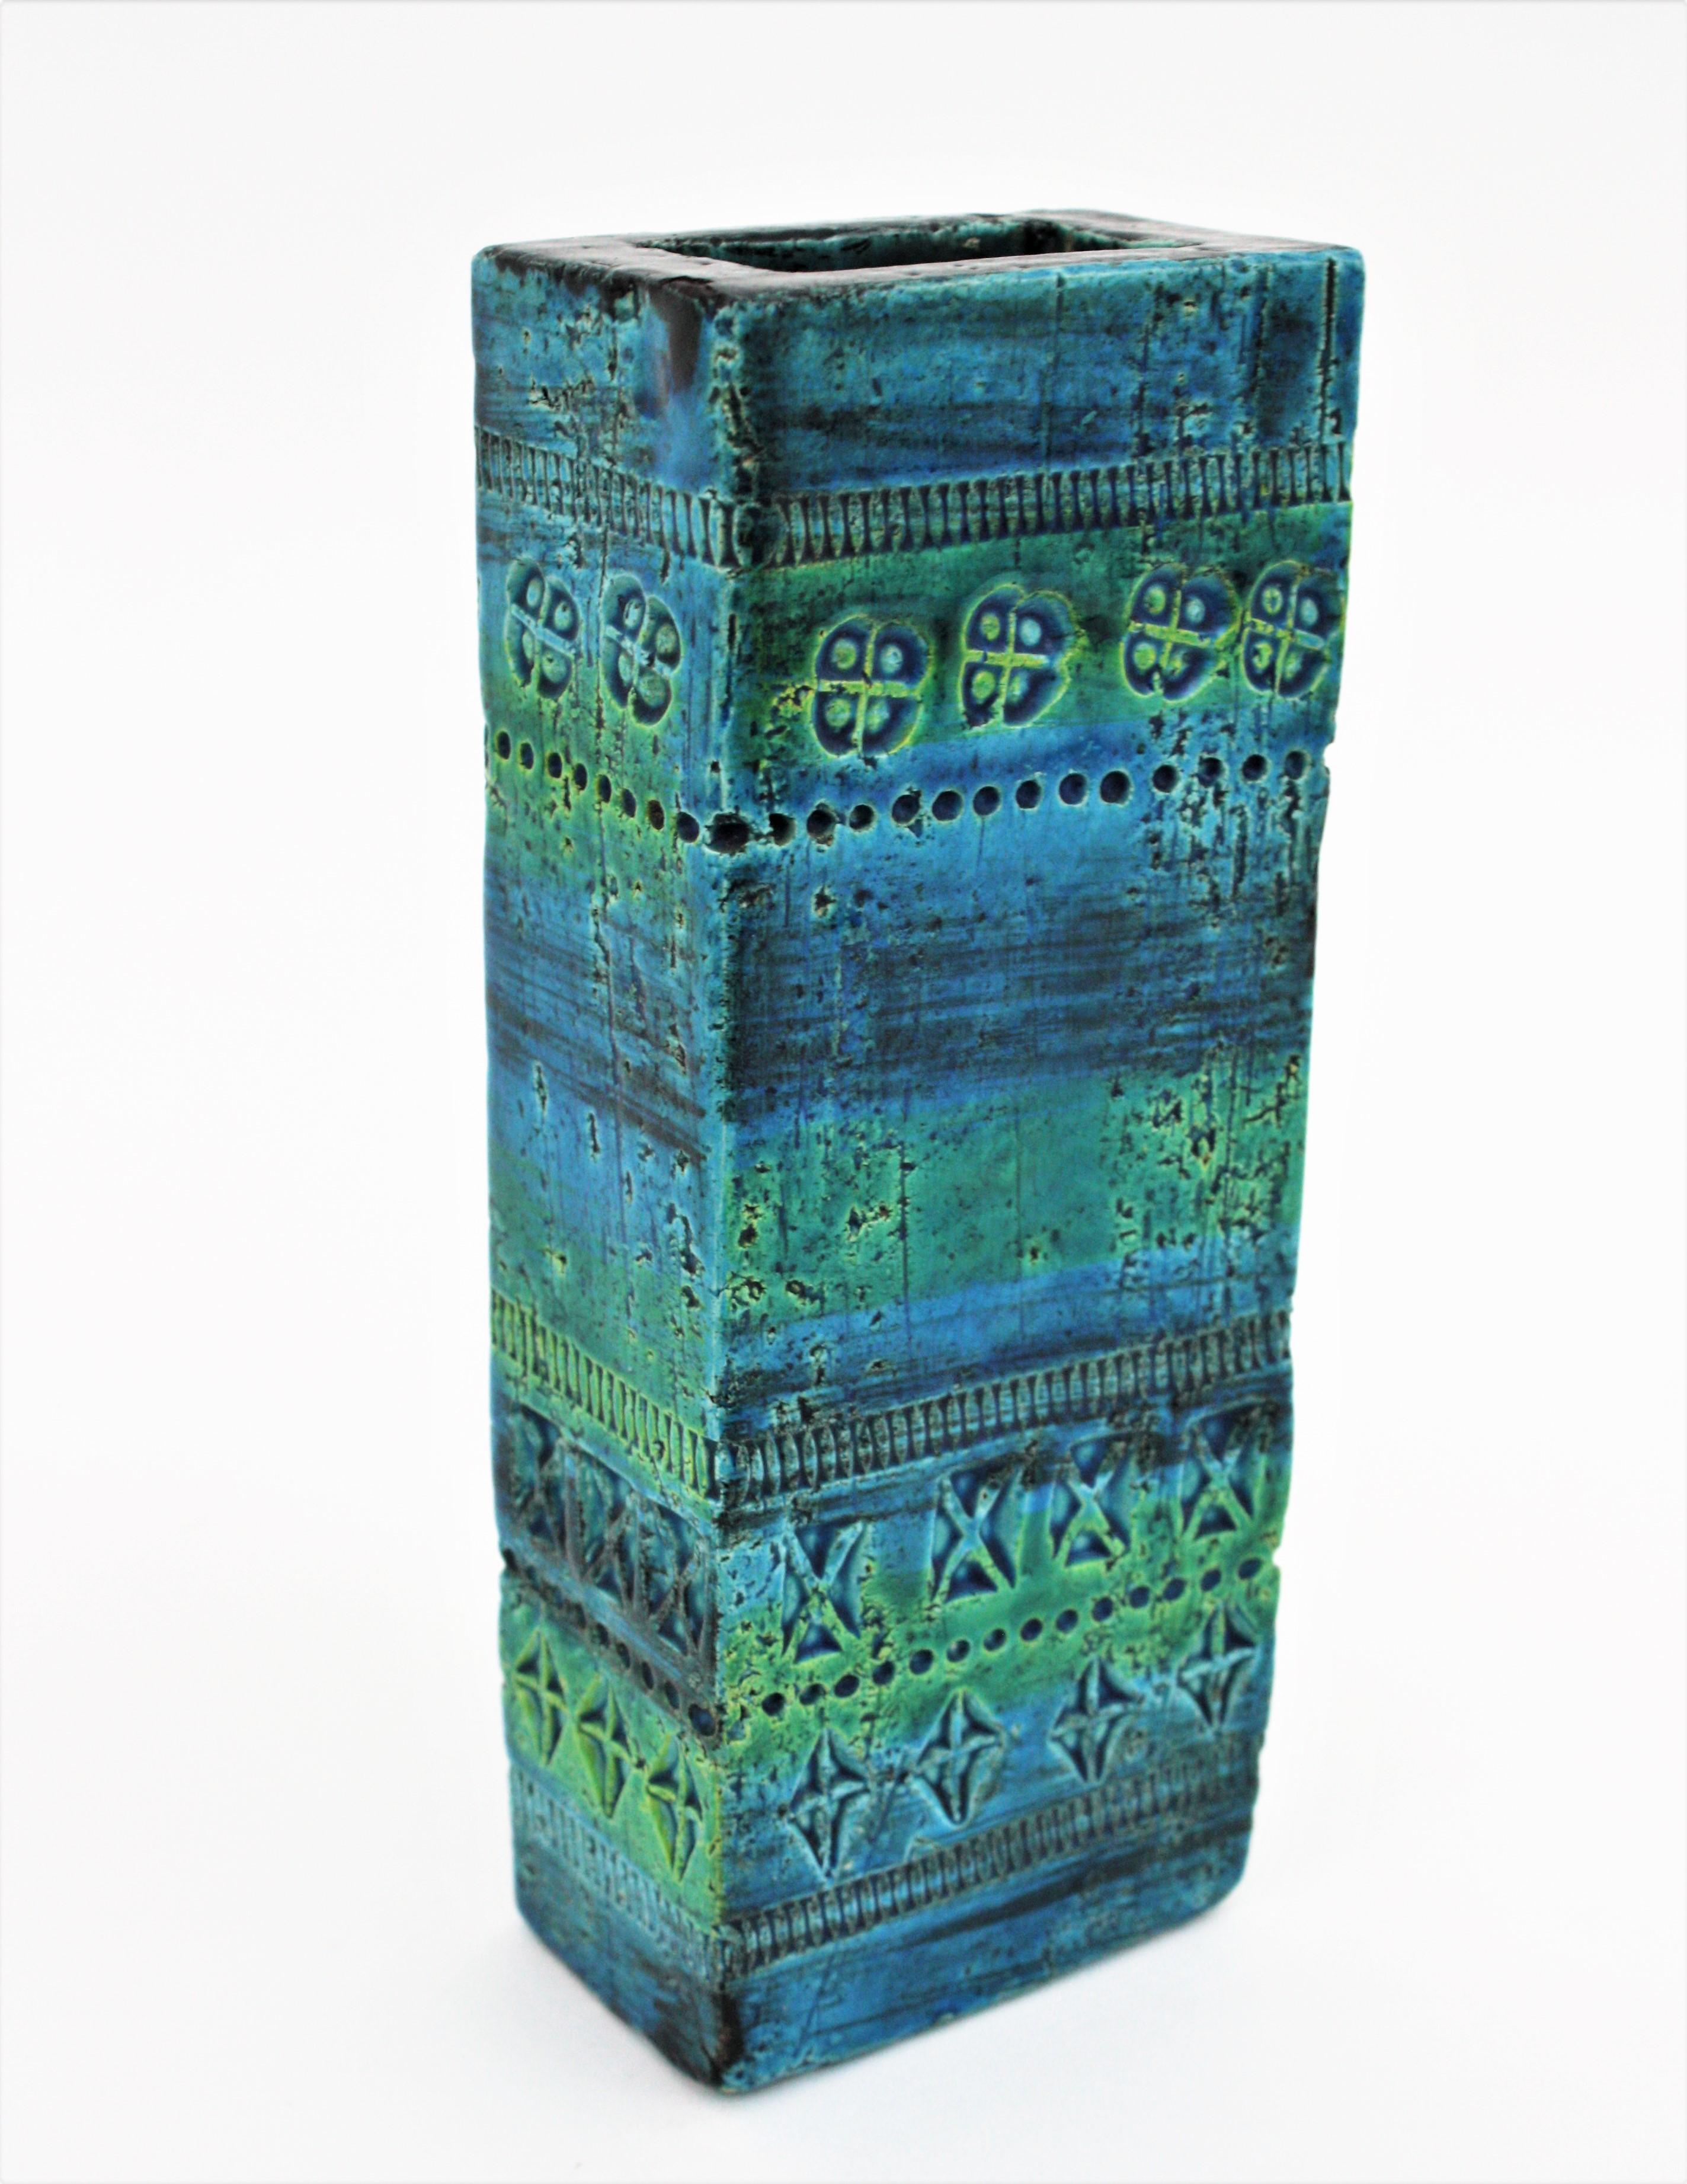 Aldo Londi Bitossi Rimini Blue Glazed Ceramic Rectangular Vase 4